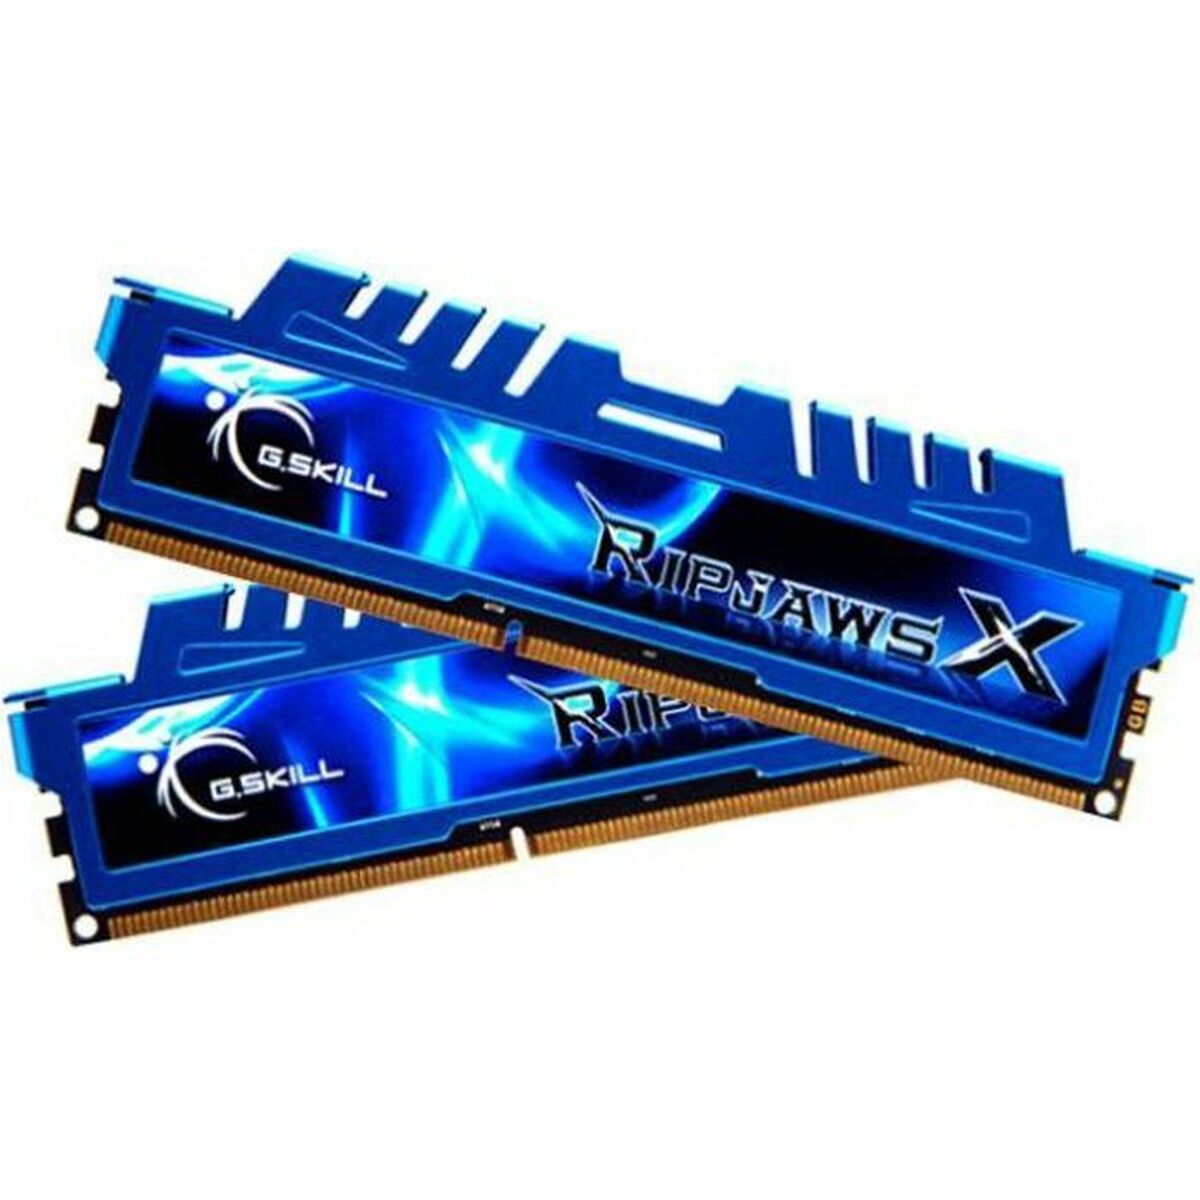 Mémoire RAM GSKILL F3-2400C11D-8GXM DDR3 CL13 8 GB